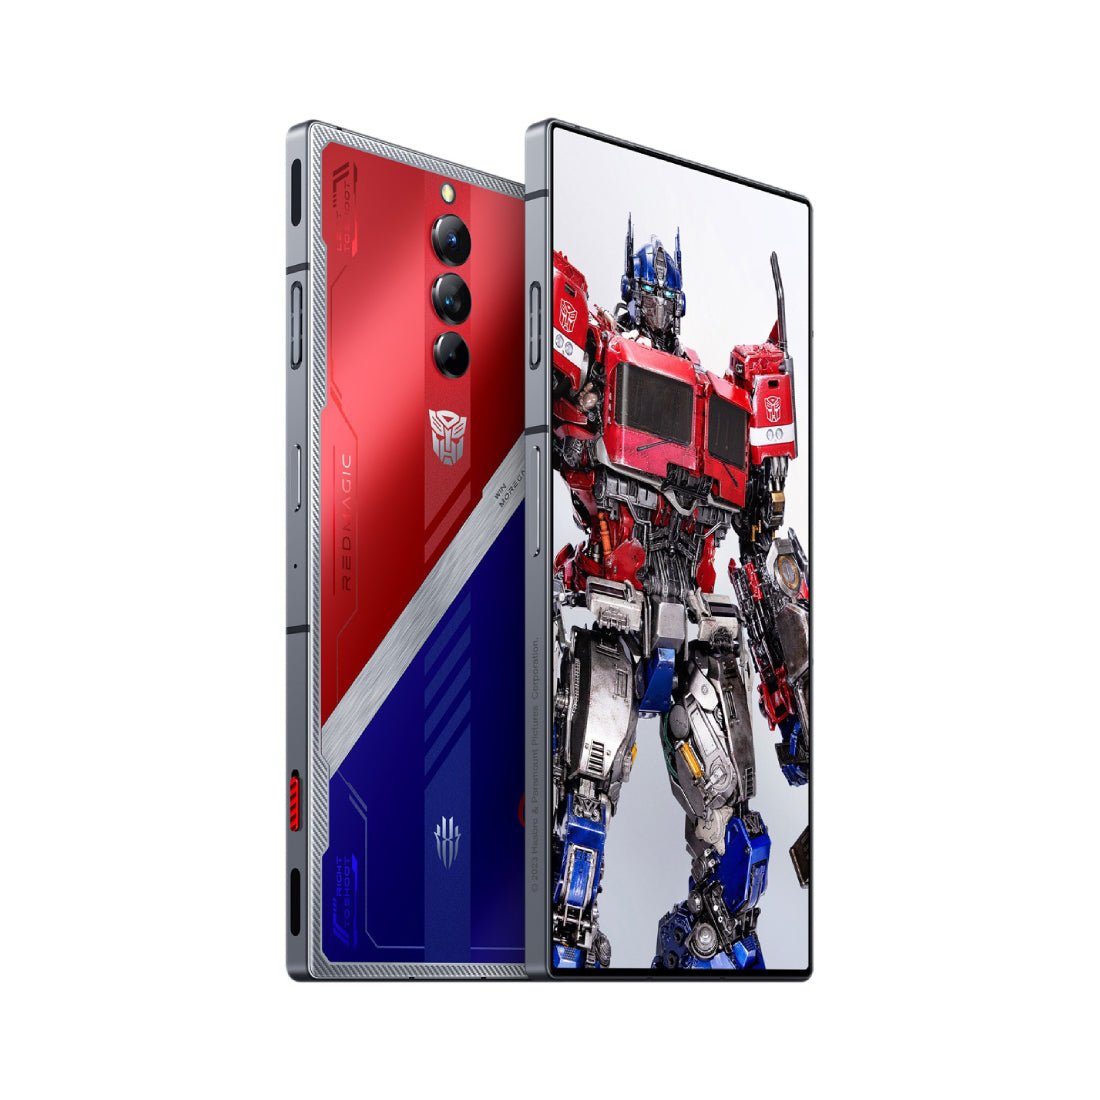 Red Magic 8 Pro Plus 16GB RAM 512GB Gaming Mobile - Transformers Edition - هاتف - Store 974 | ستور ٩٧٤